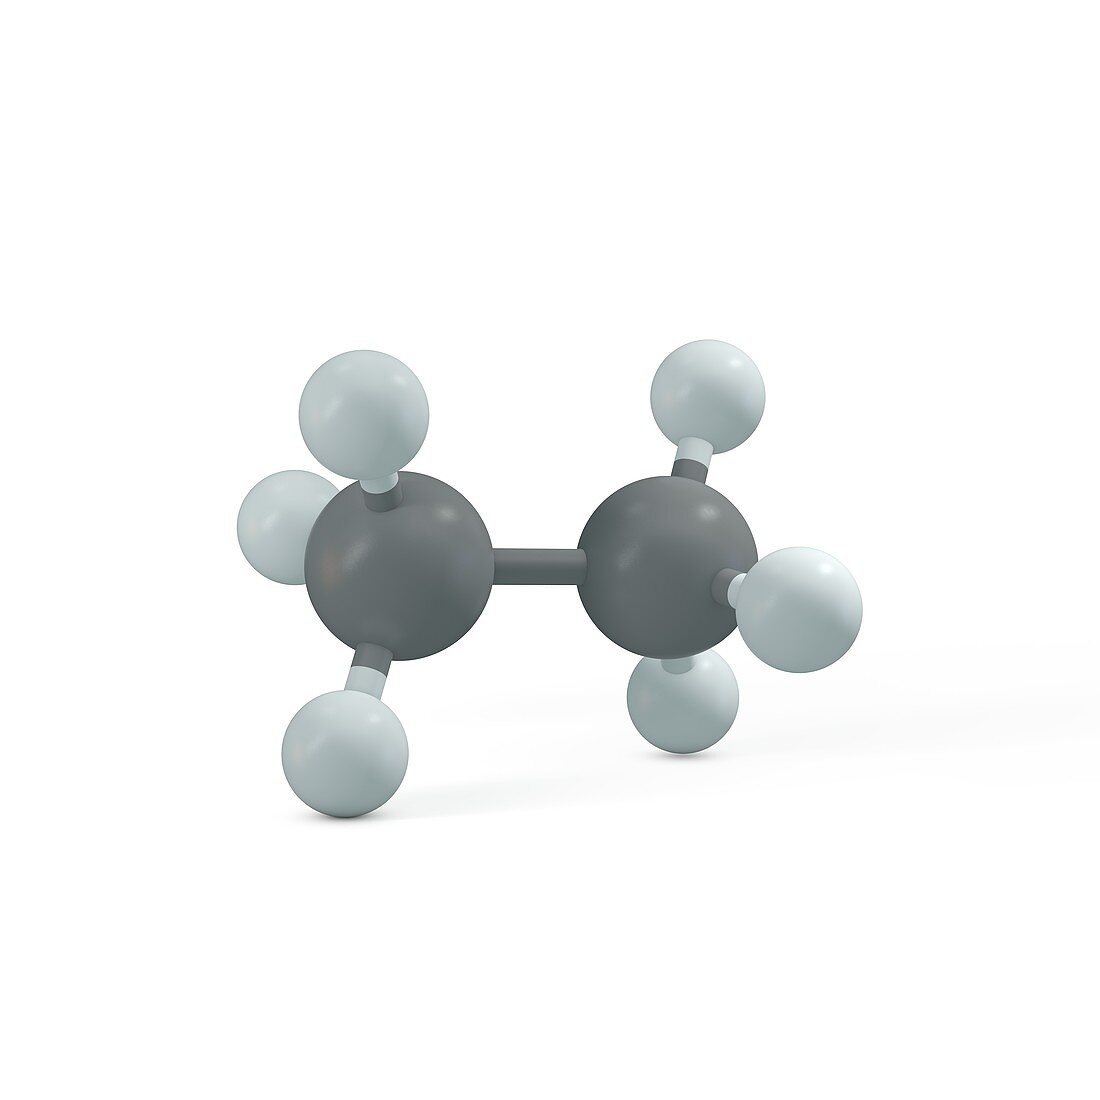 Ethane molecule, illustration